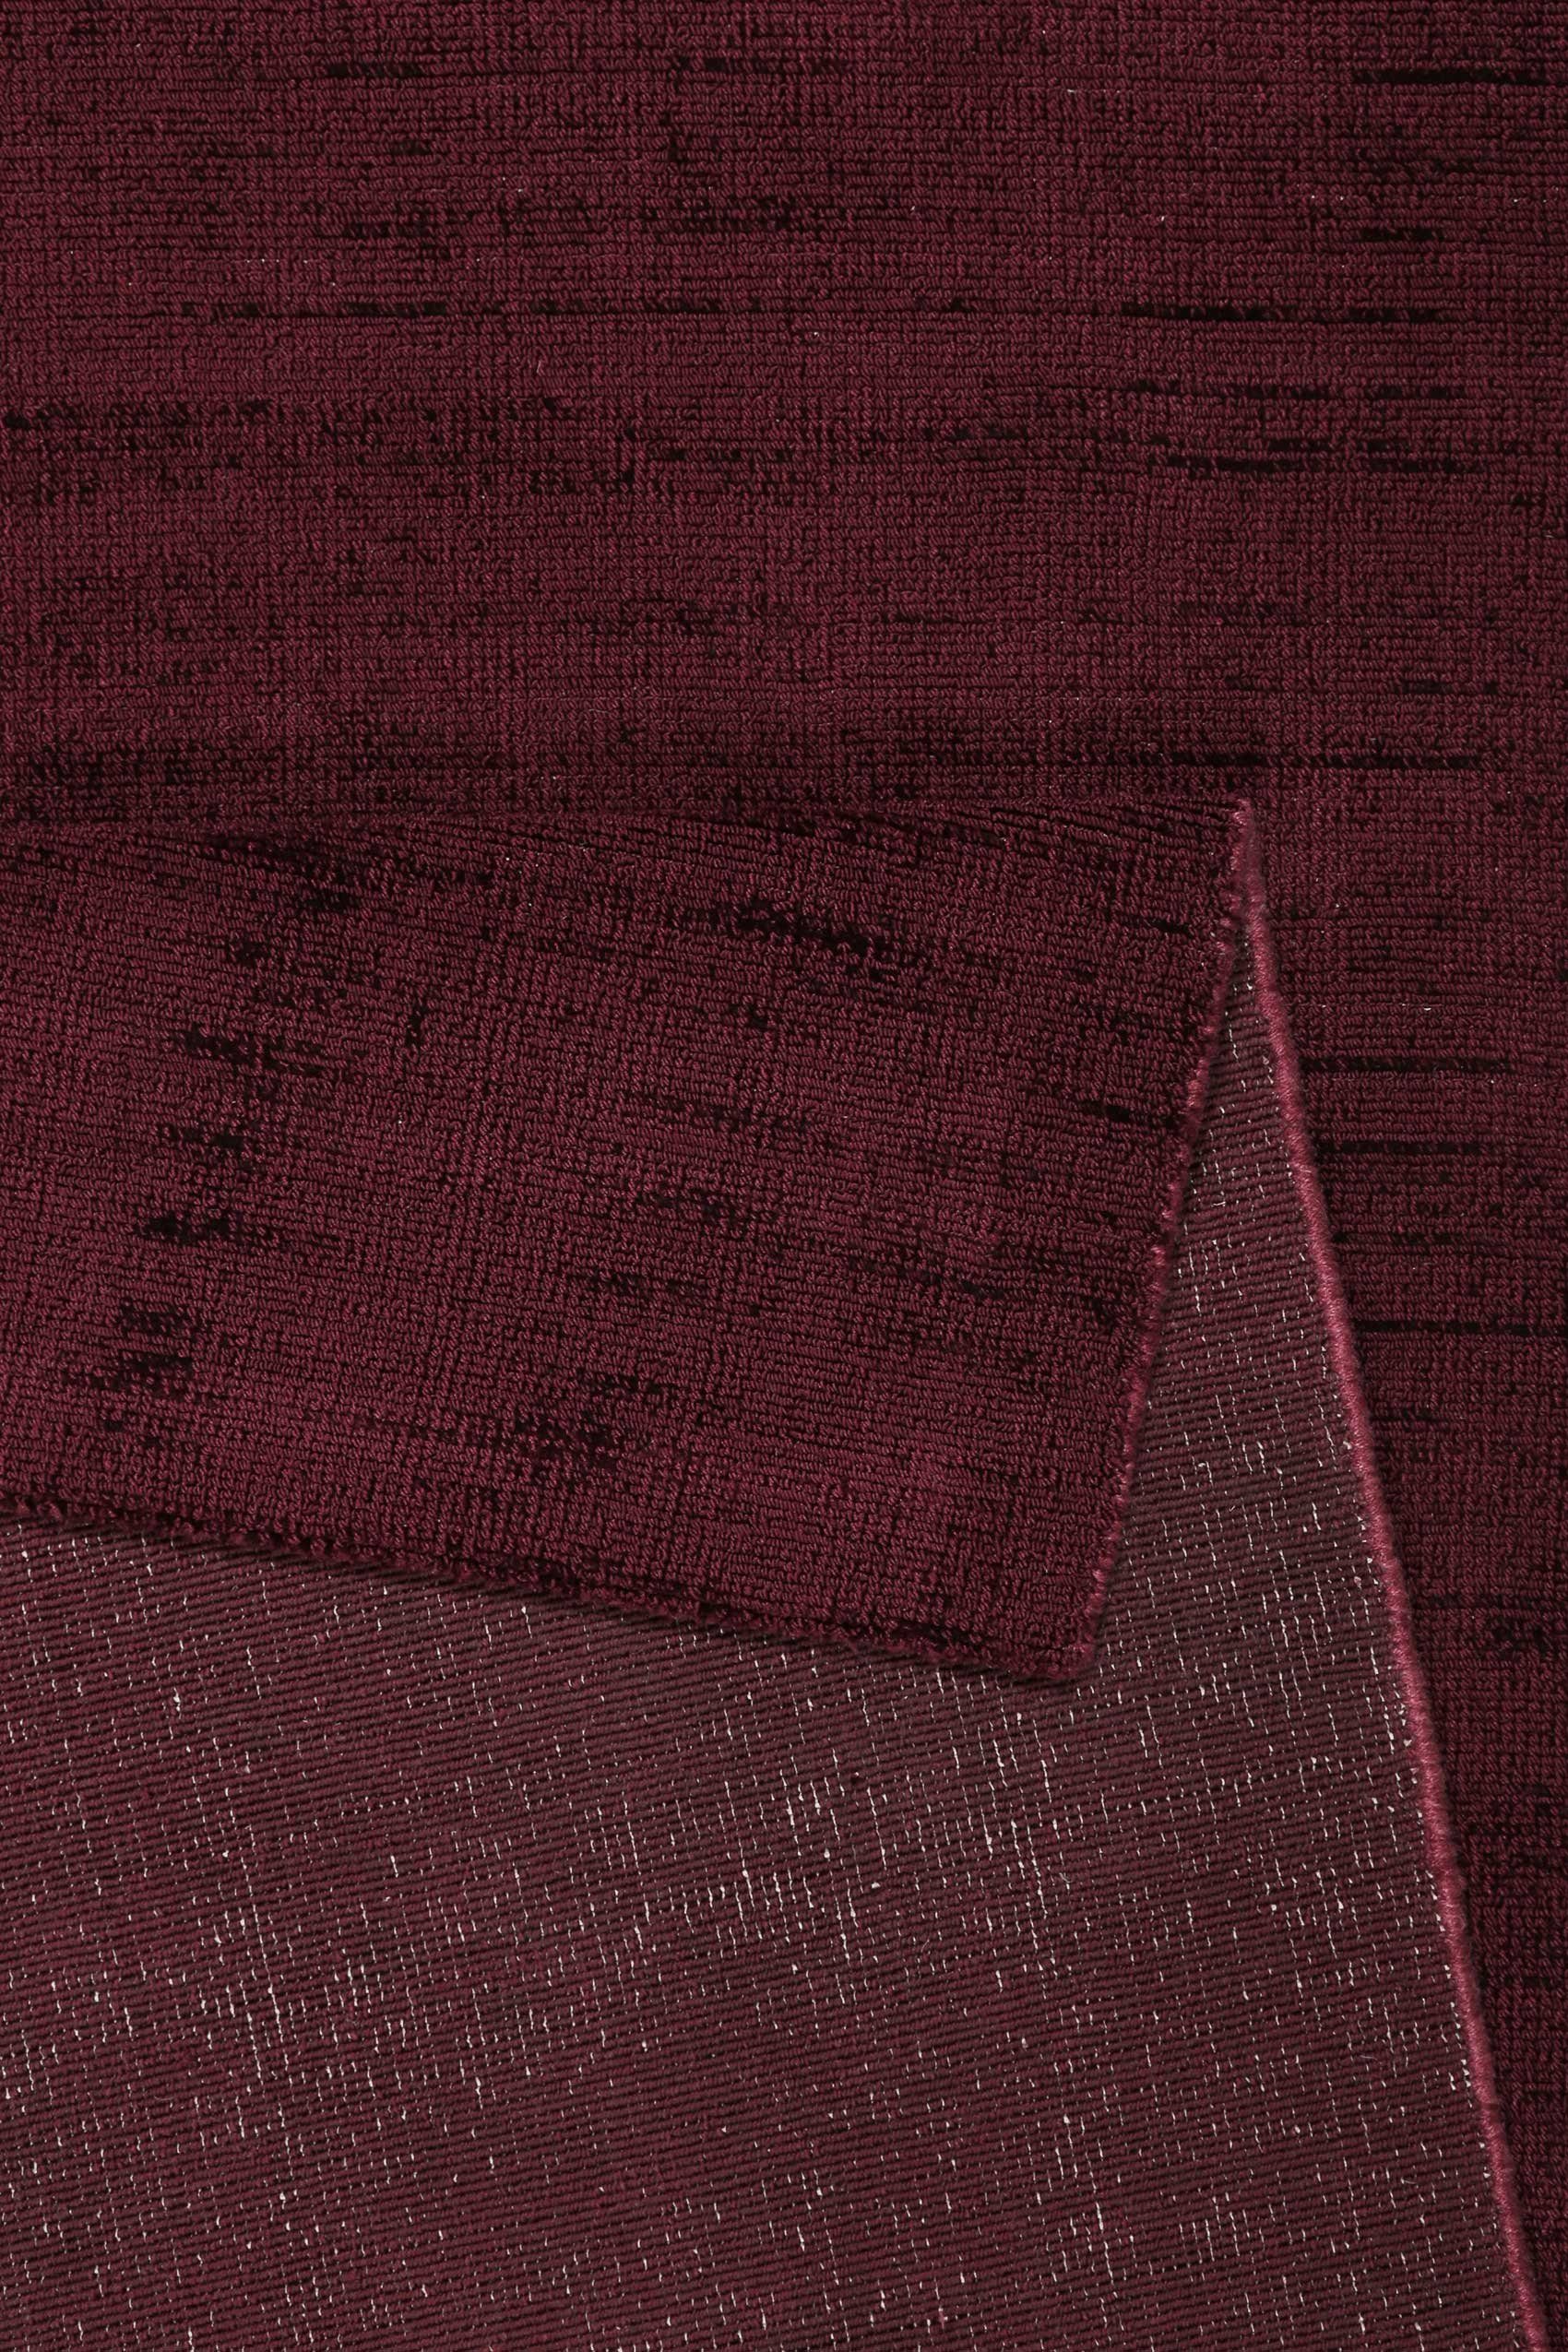 mm, schimmernde Melangeeffekt Teppich 8 Farbbrillianz, bordeaux rechteckig, seidig rot Höhe: glänzend, Gil, Esprit, handgewebt,